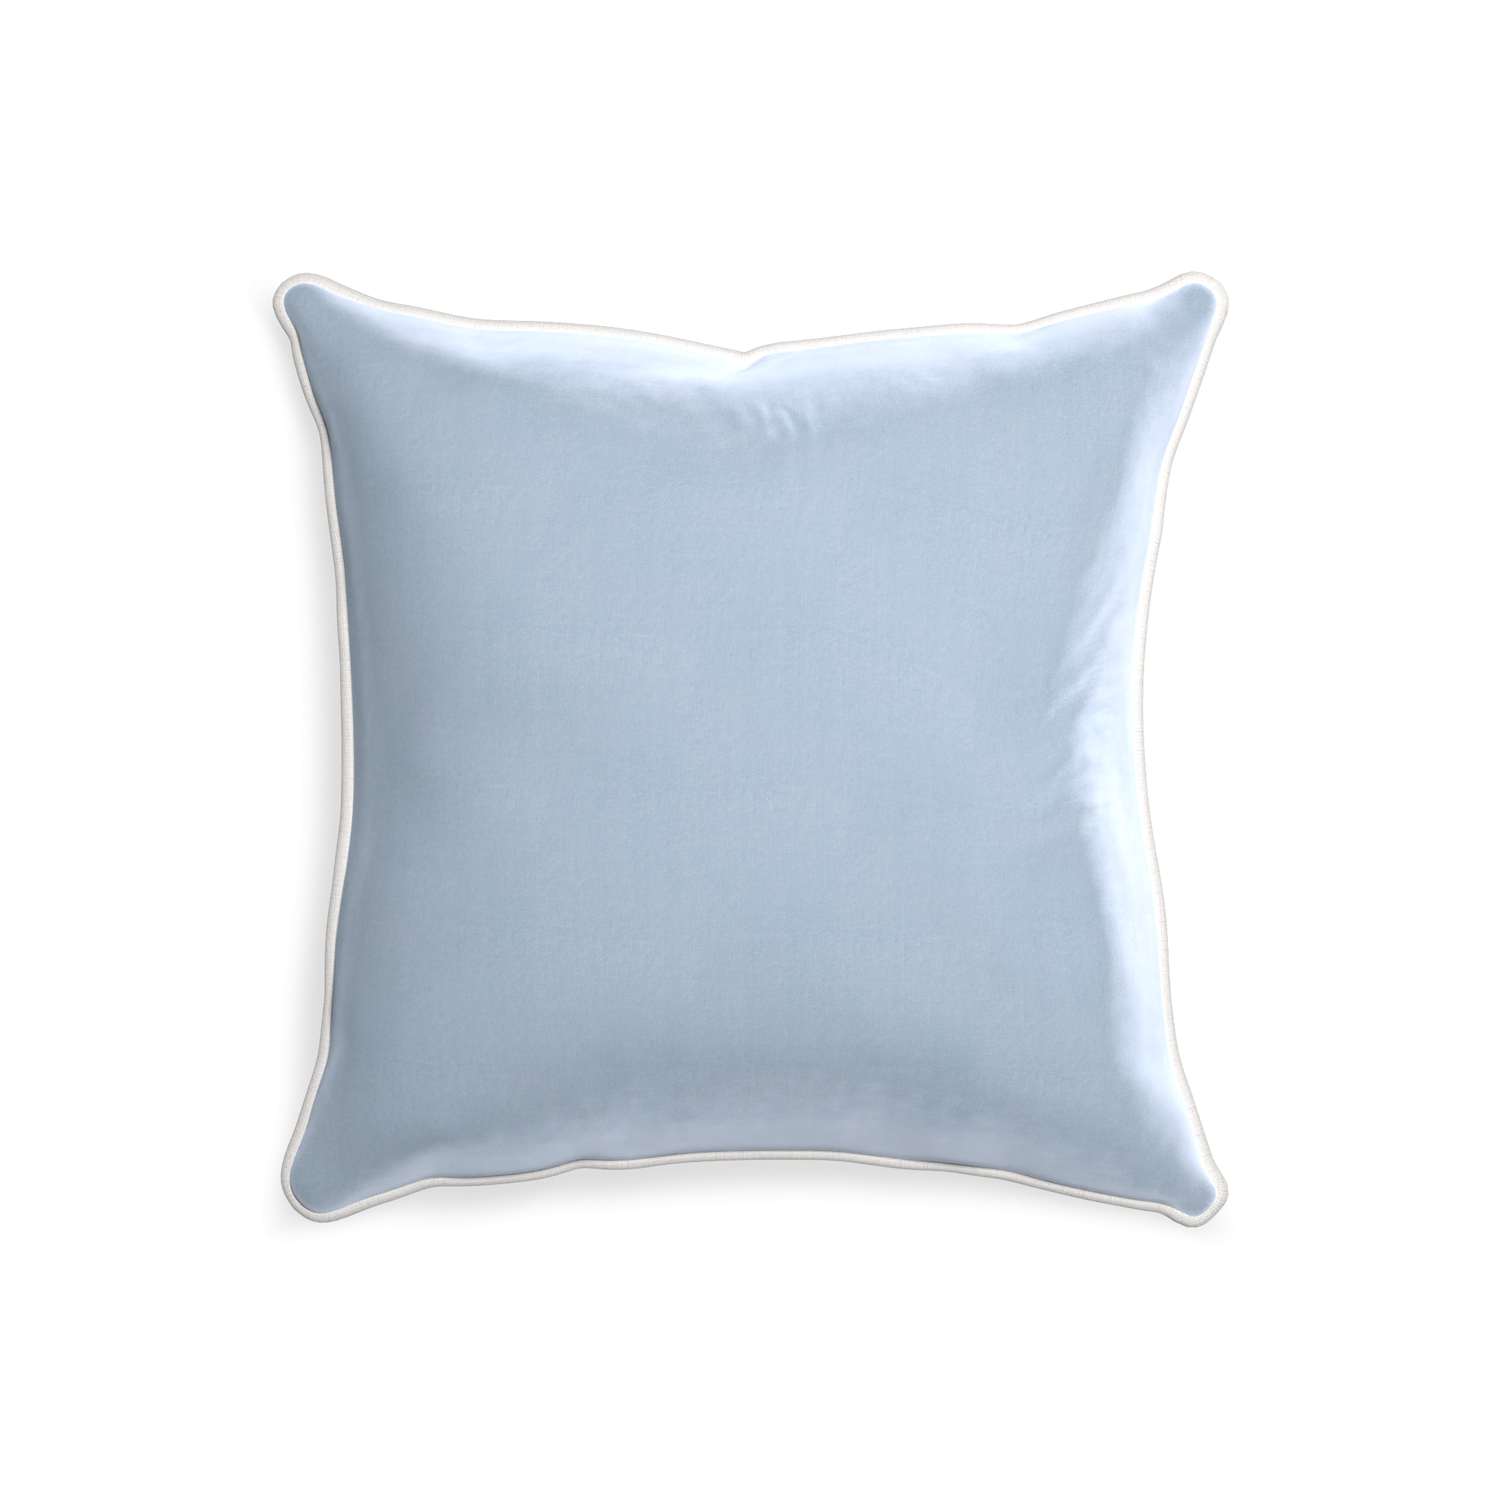 square light blue velvet pillow with white piping